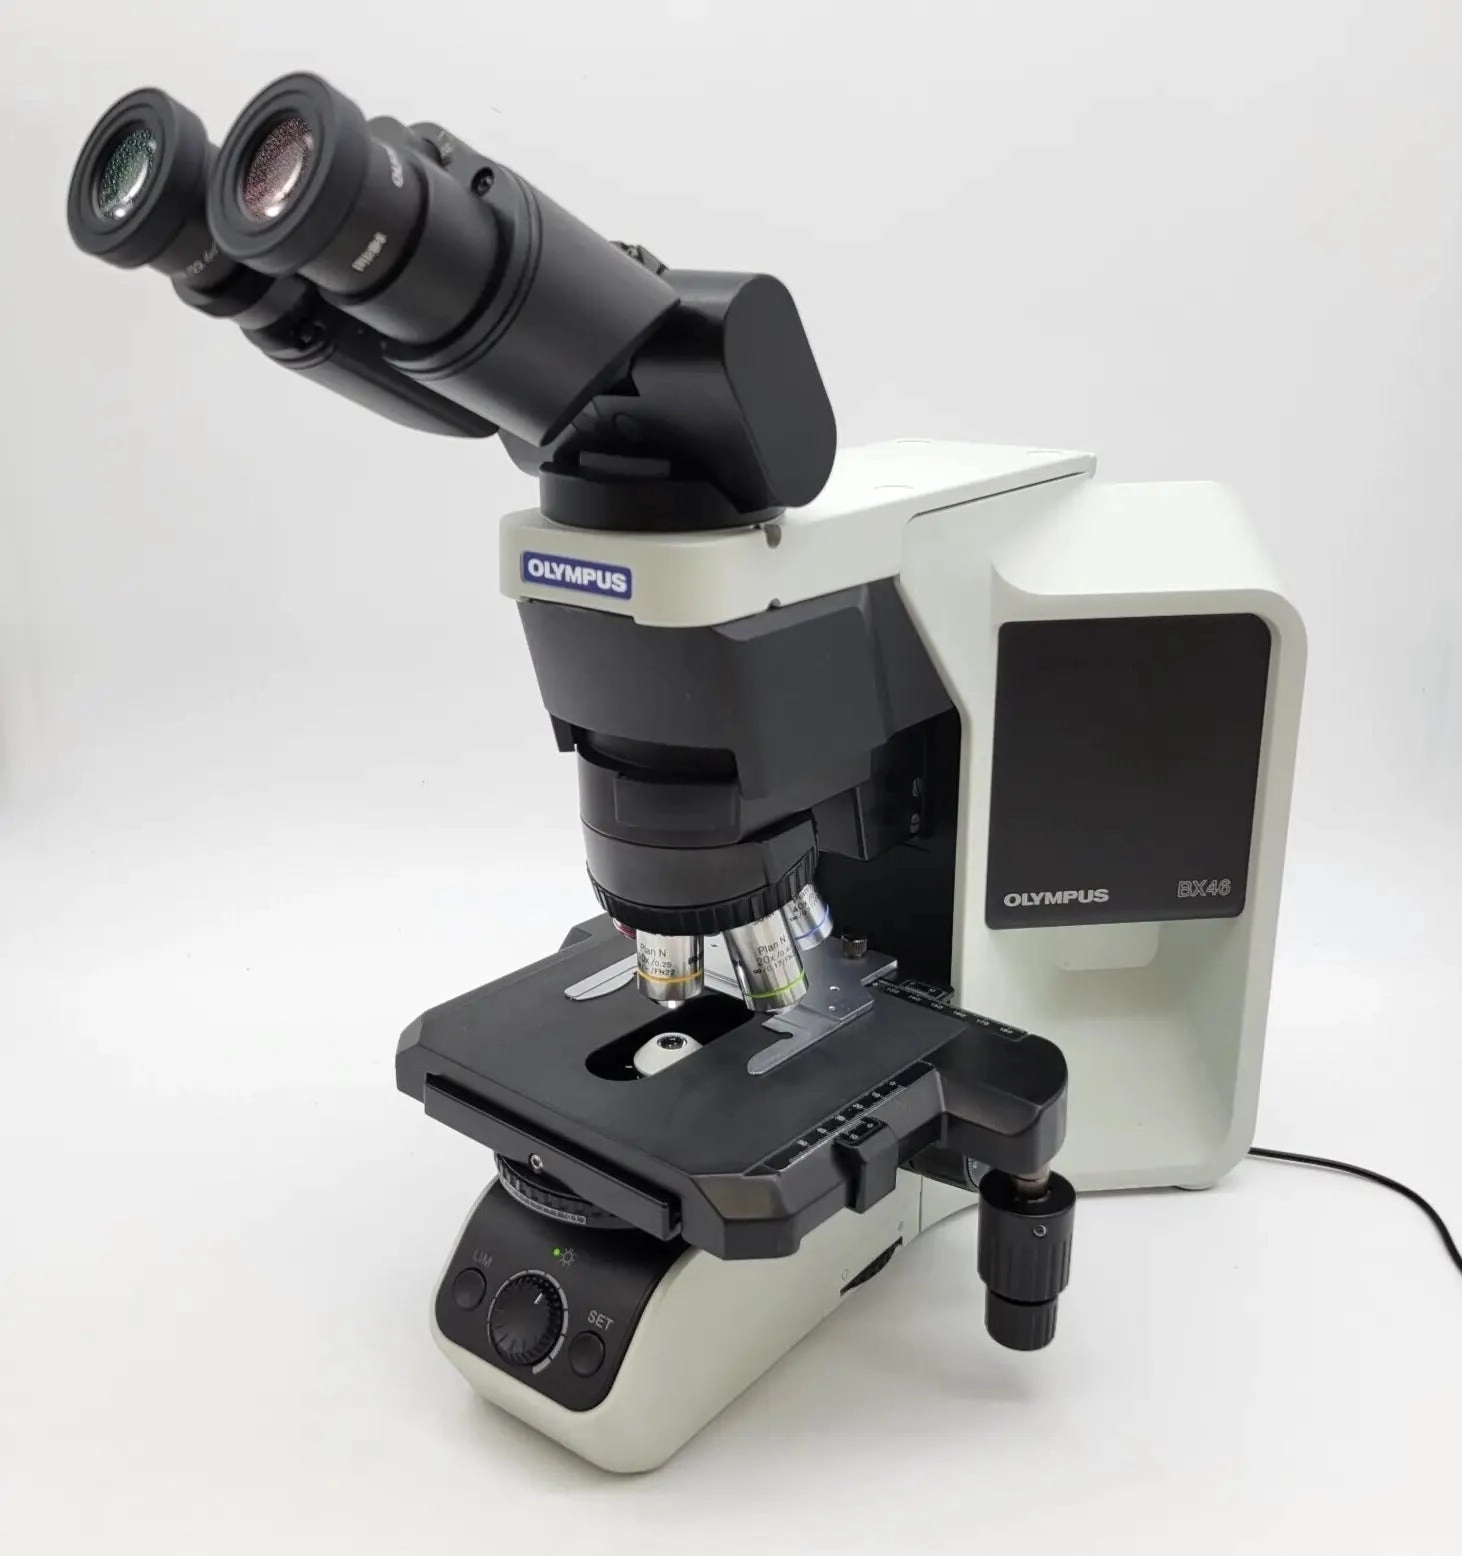 Olympus Microscope BX46 for Mohs / Pathology